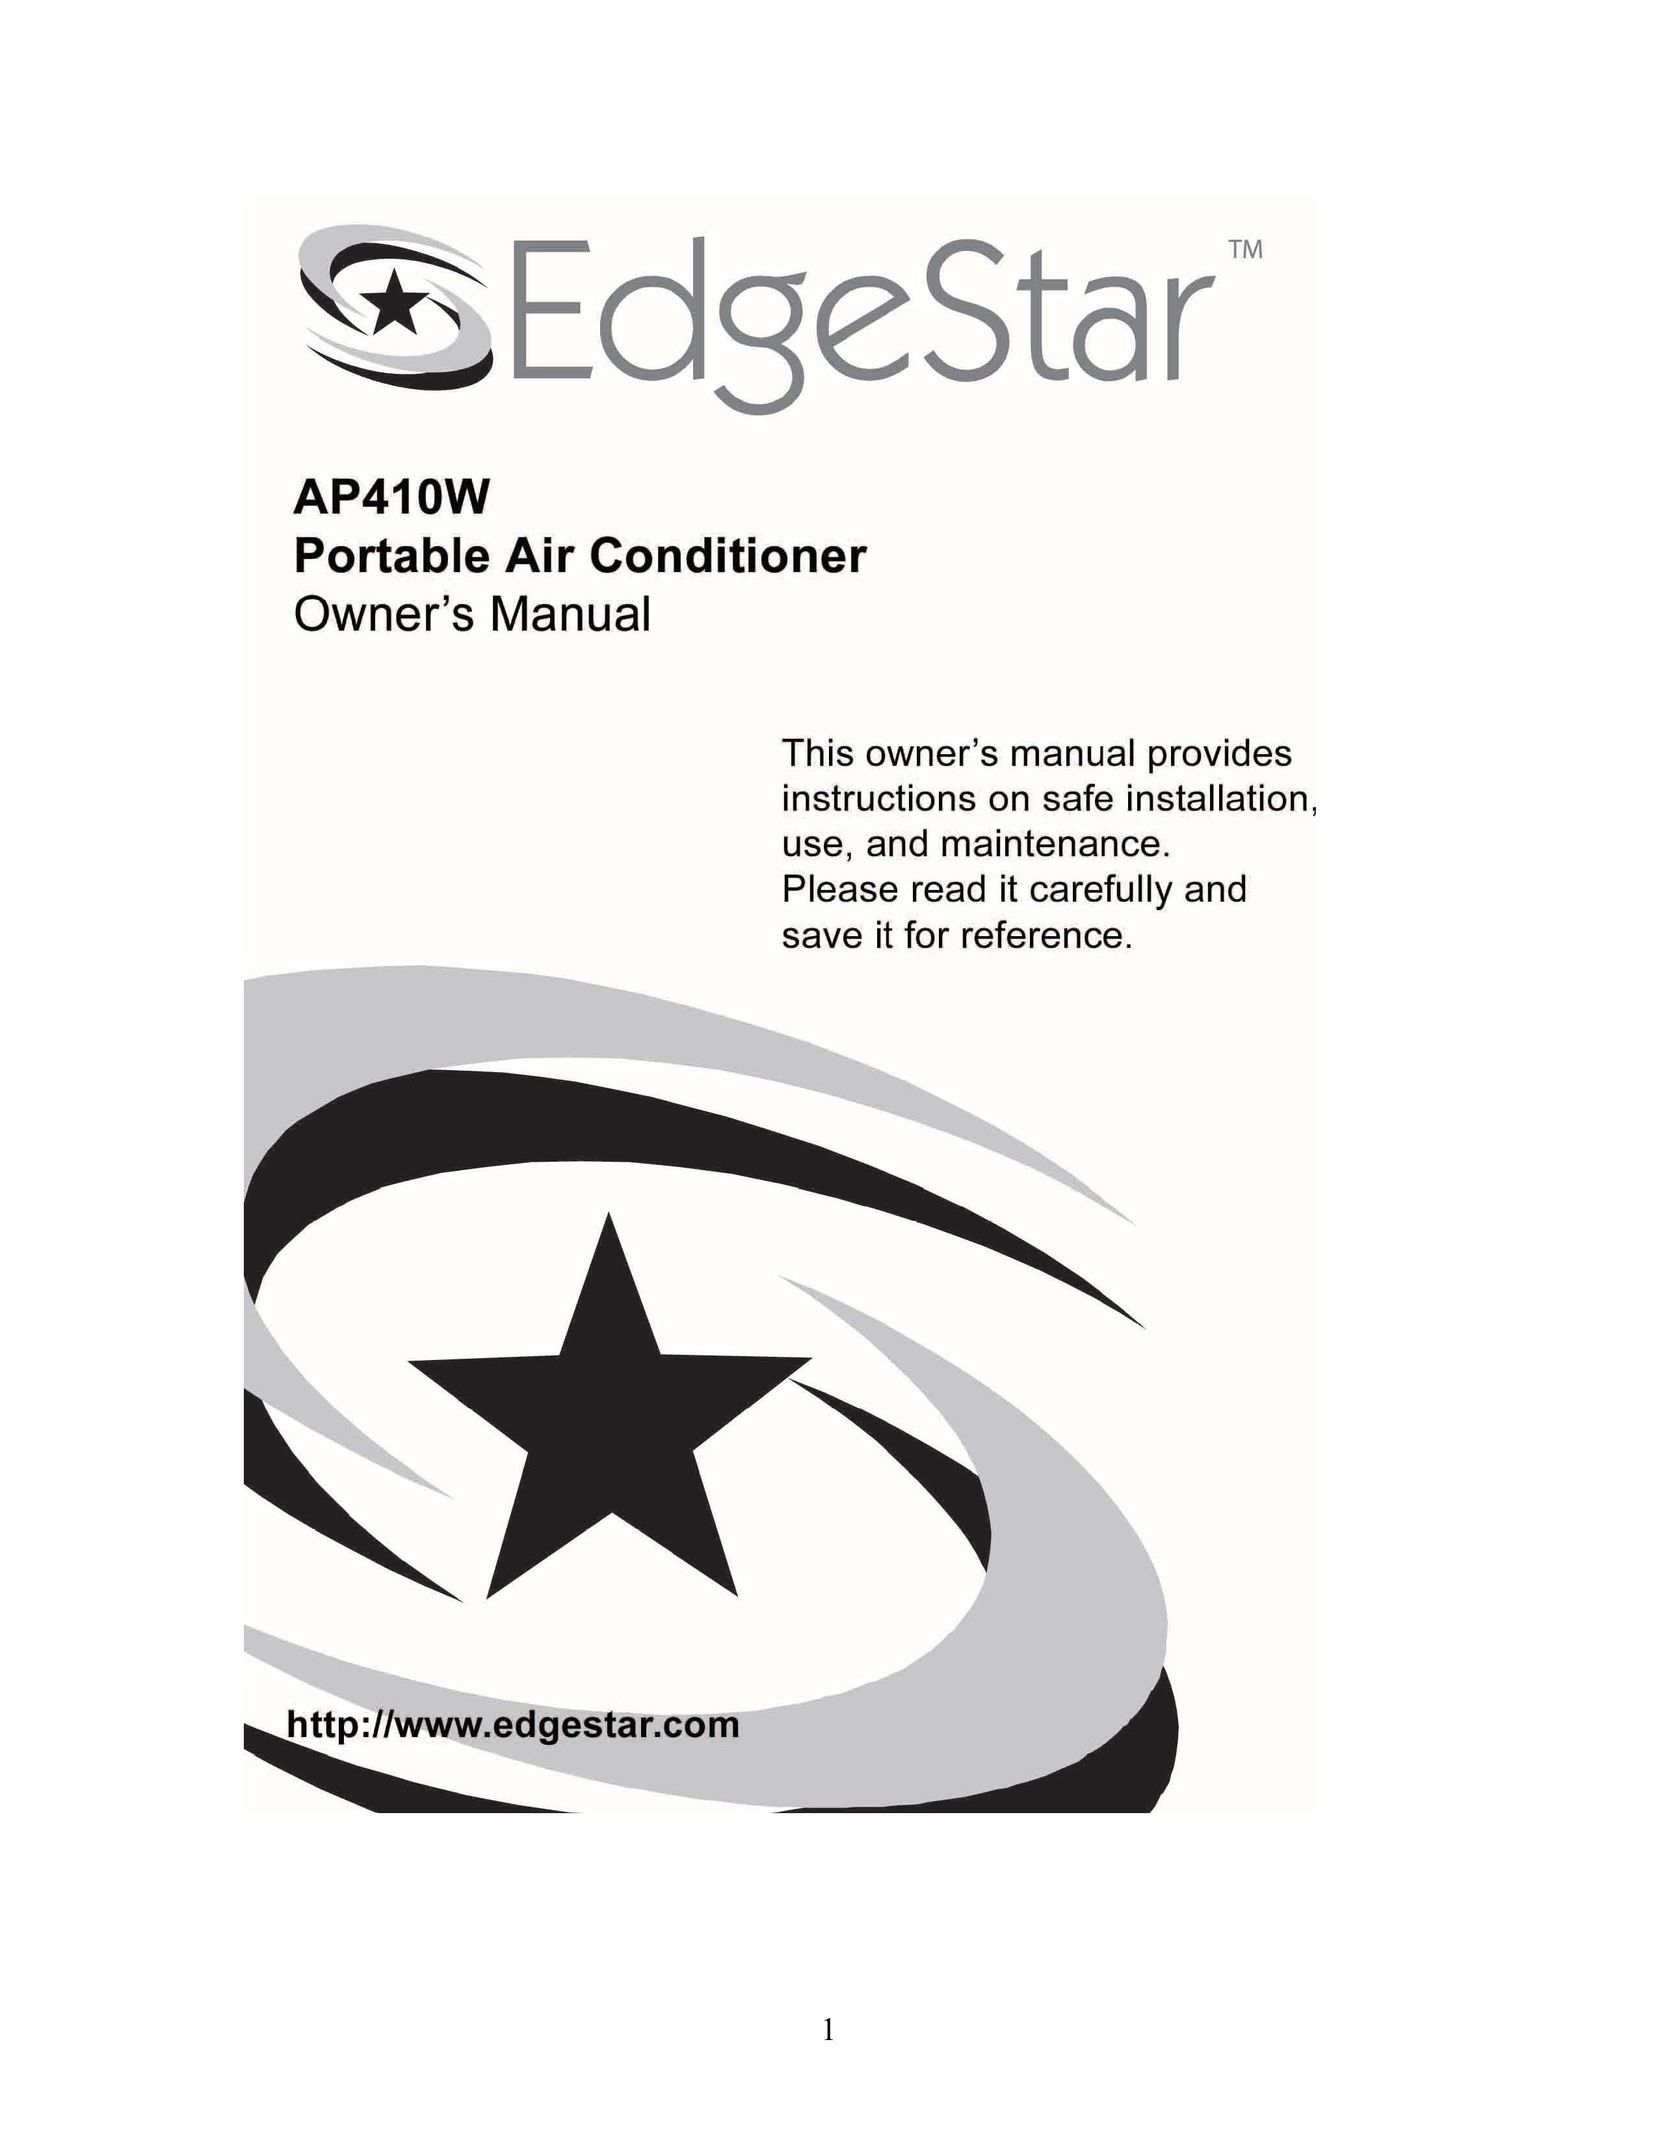 EdgeStar AP410W Air Conditioner User Manual